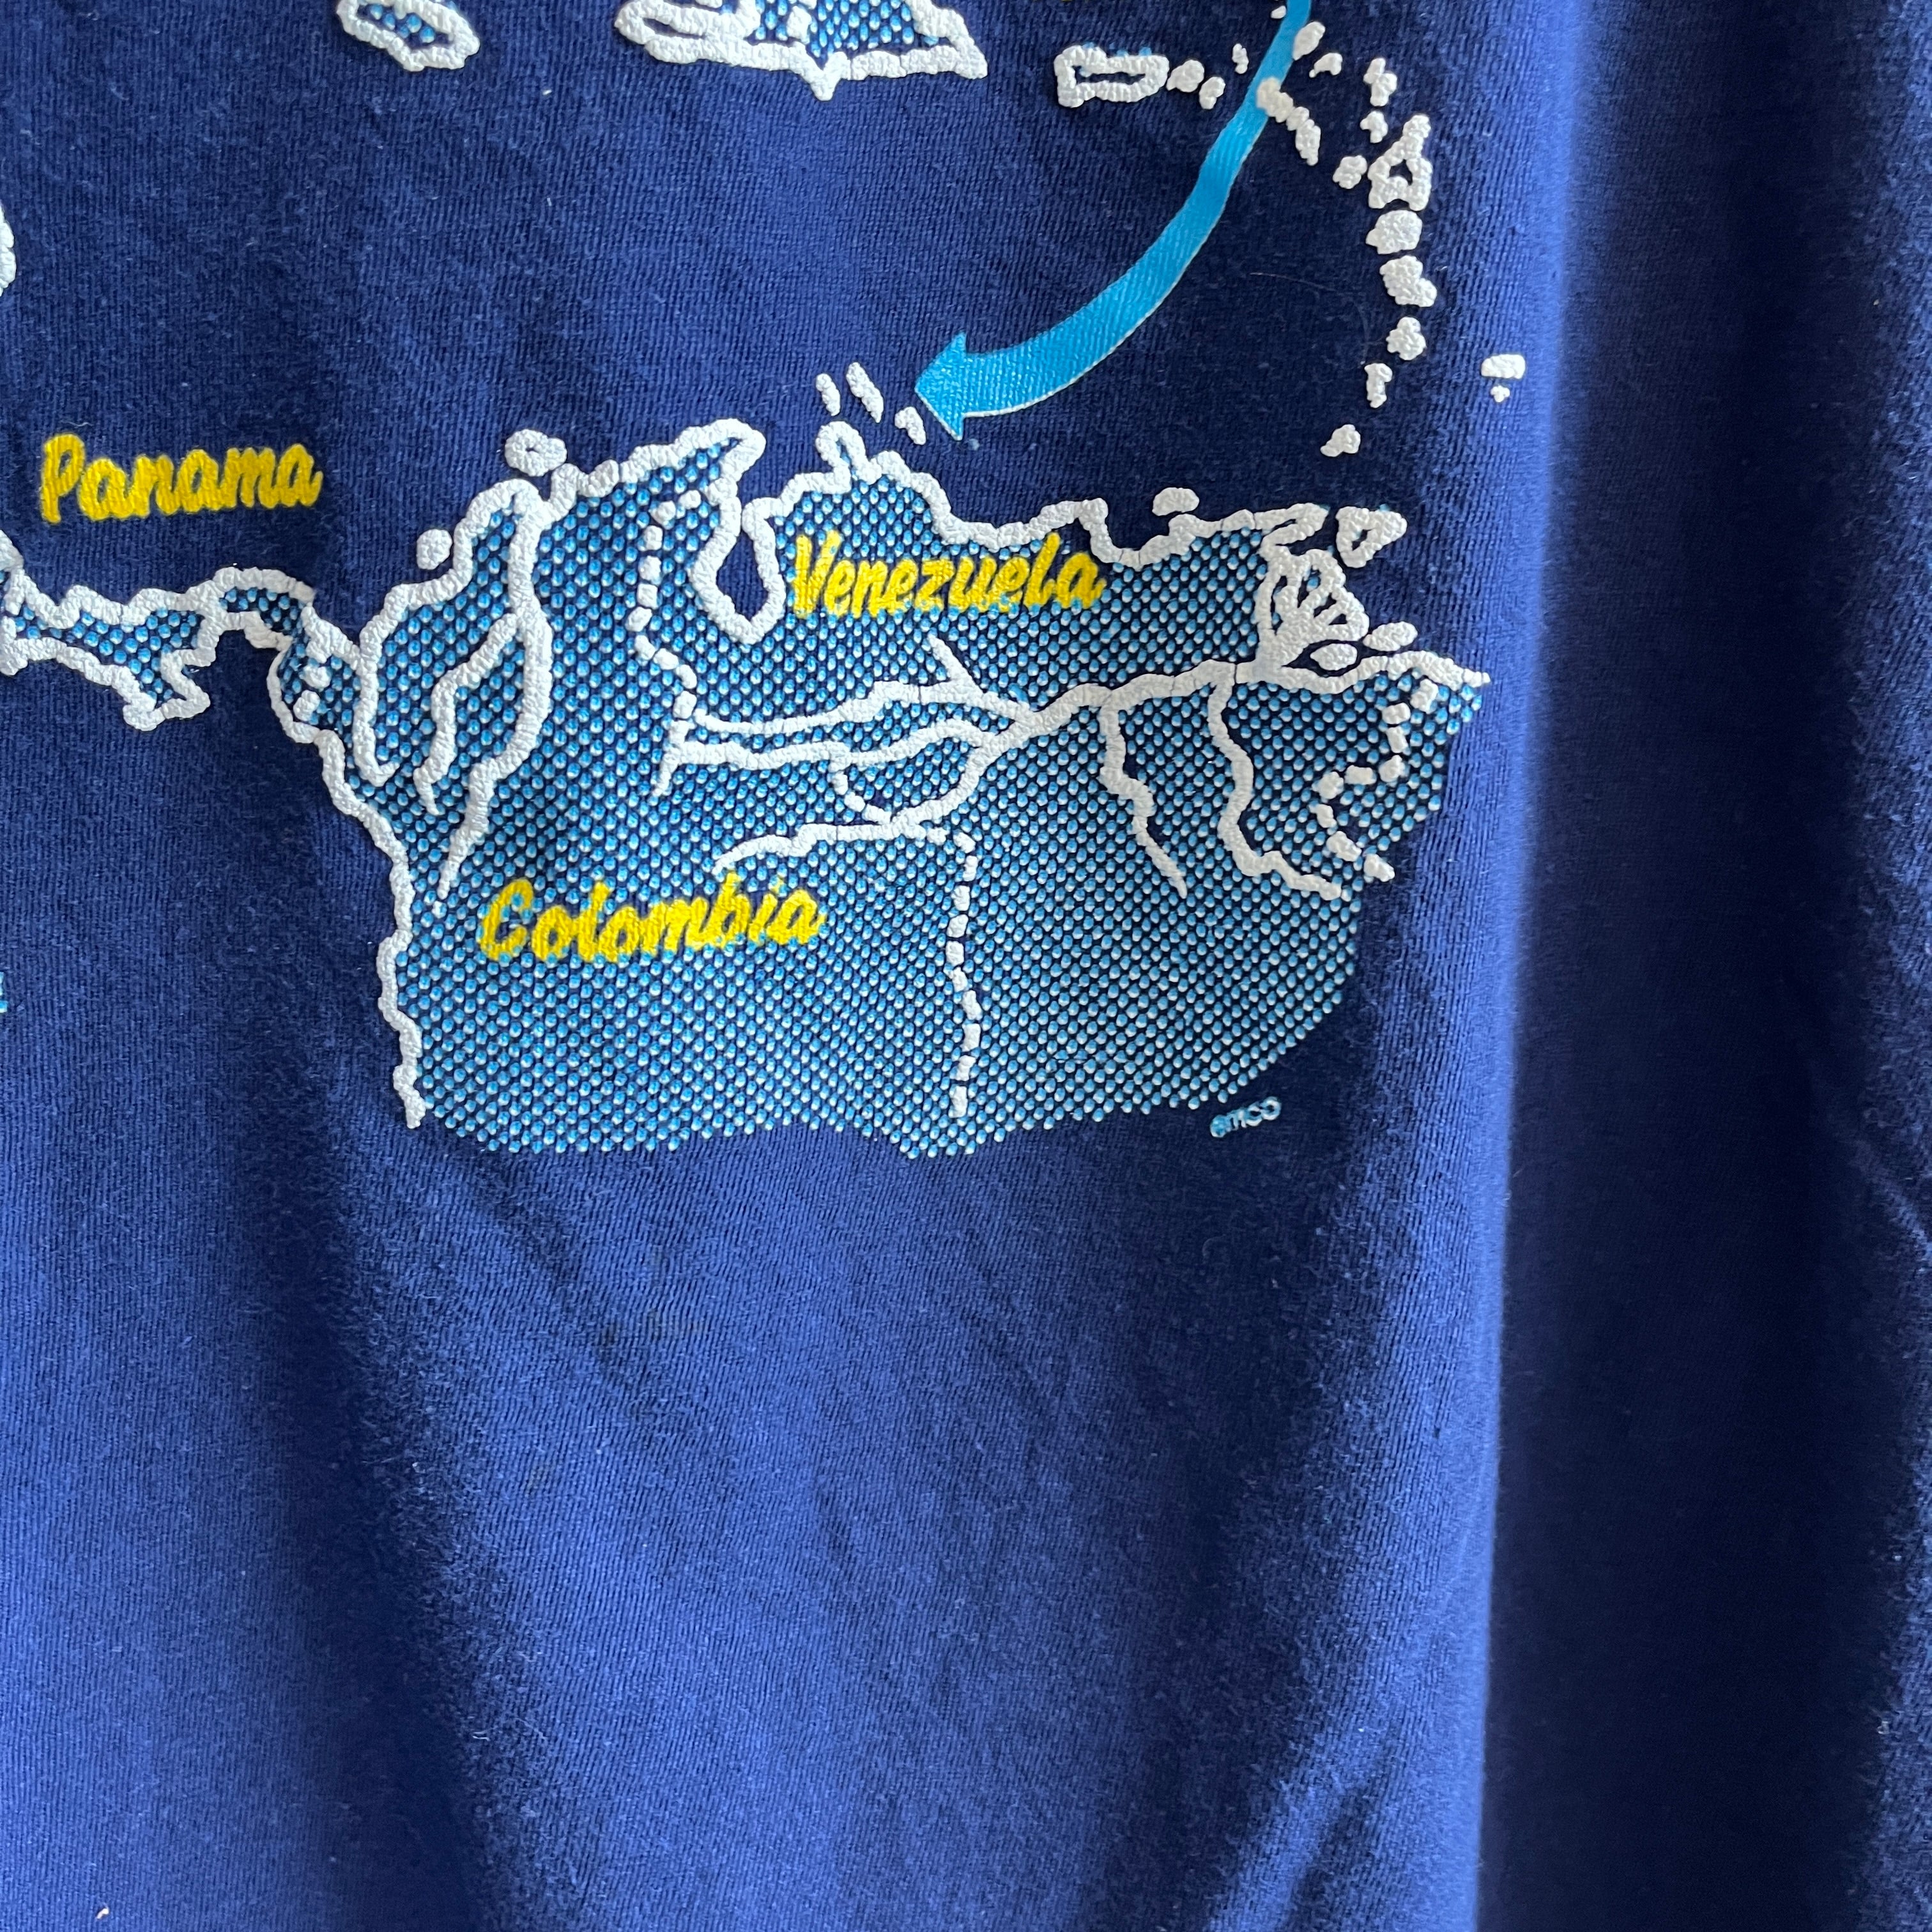 1980s Barely Worn Aruba Cotton Tourist T-Shirt